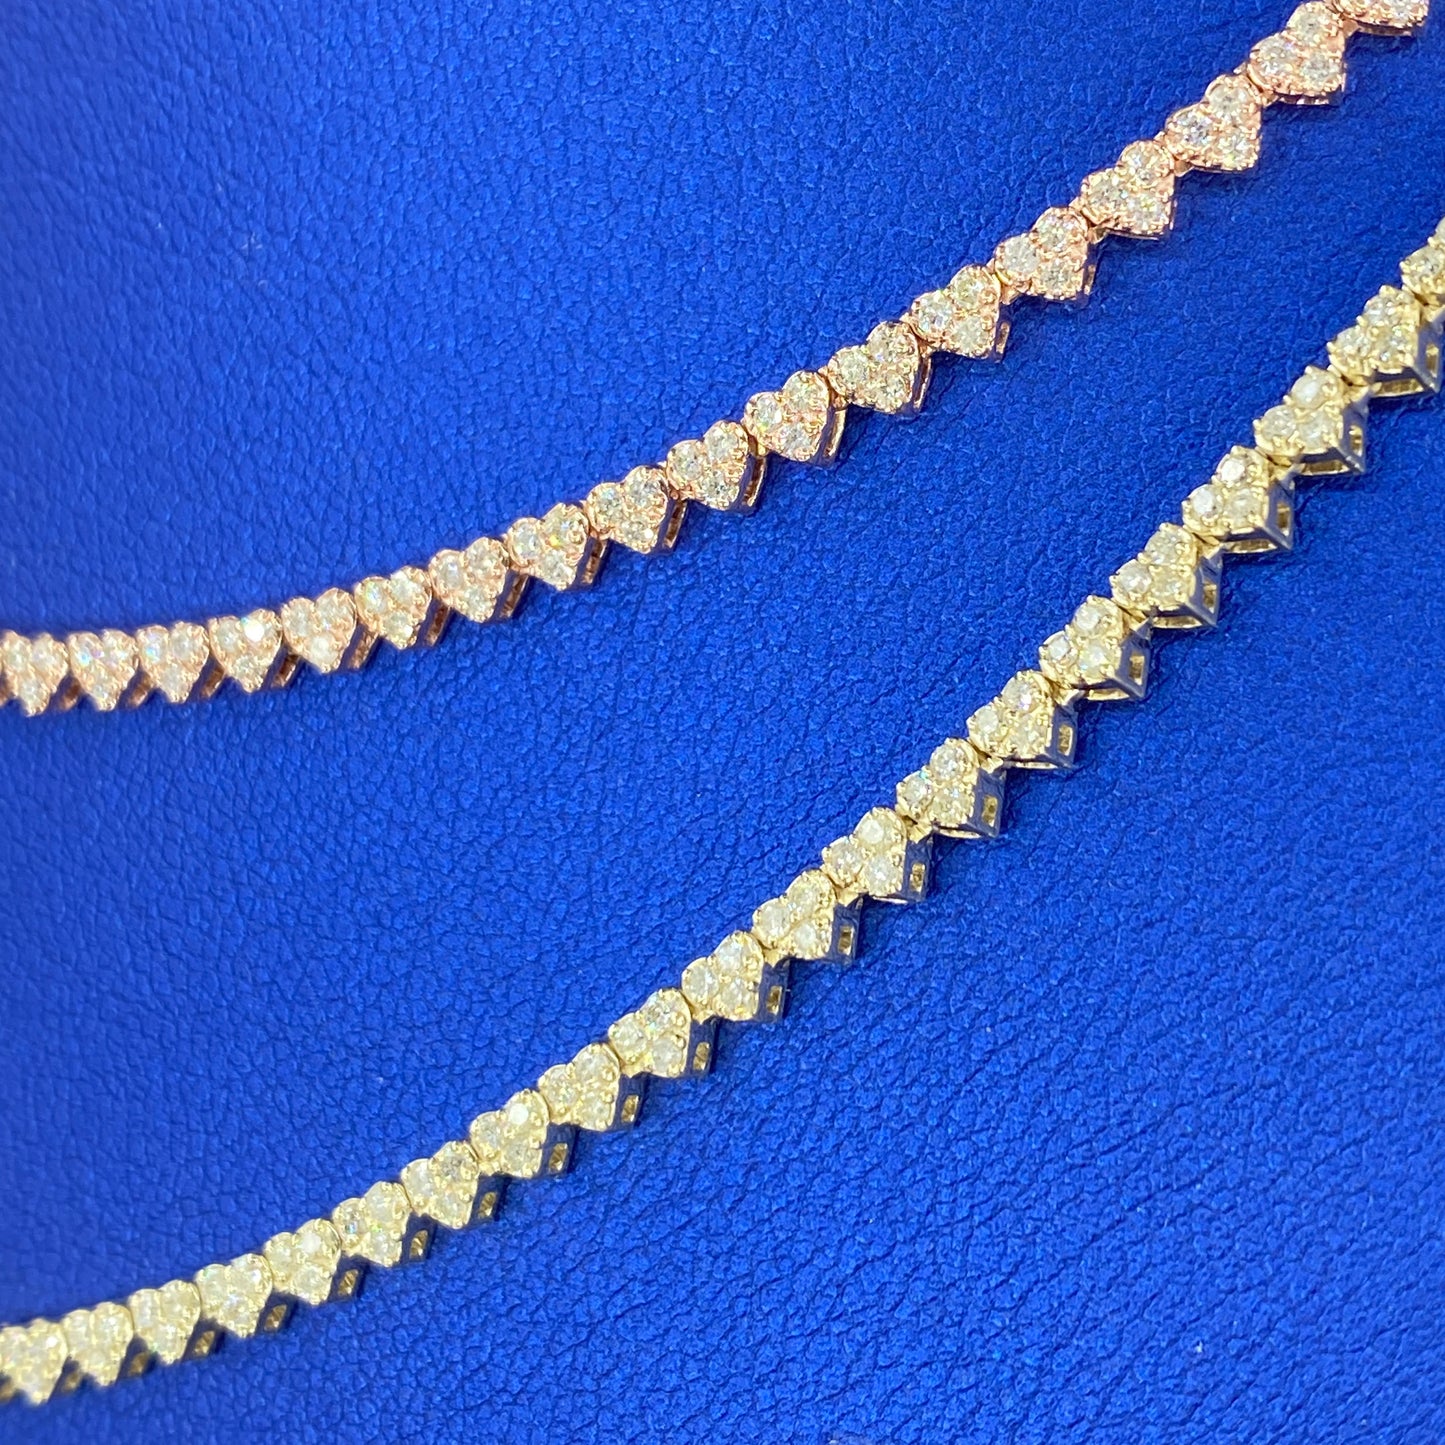 10K Heart Tennis Chain Diamond Necklace